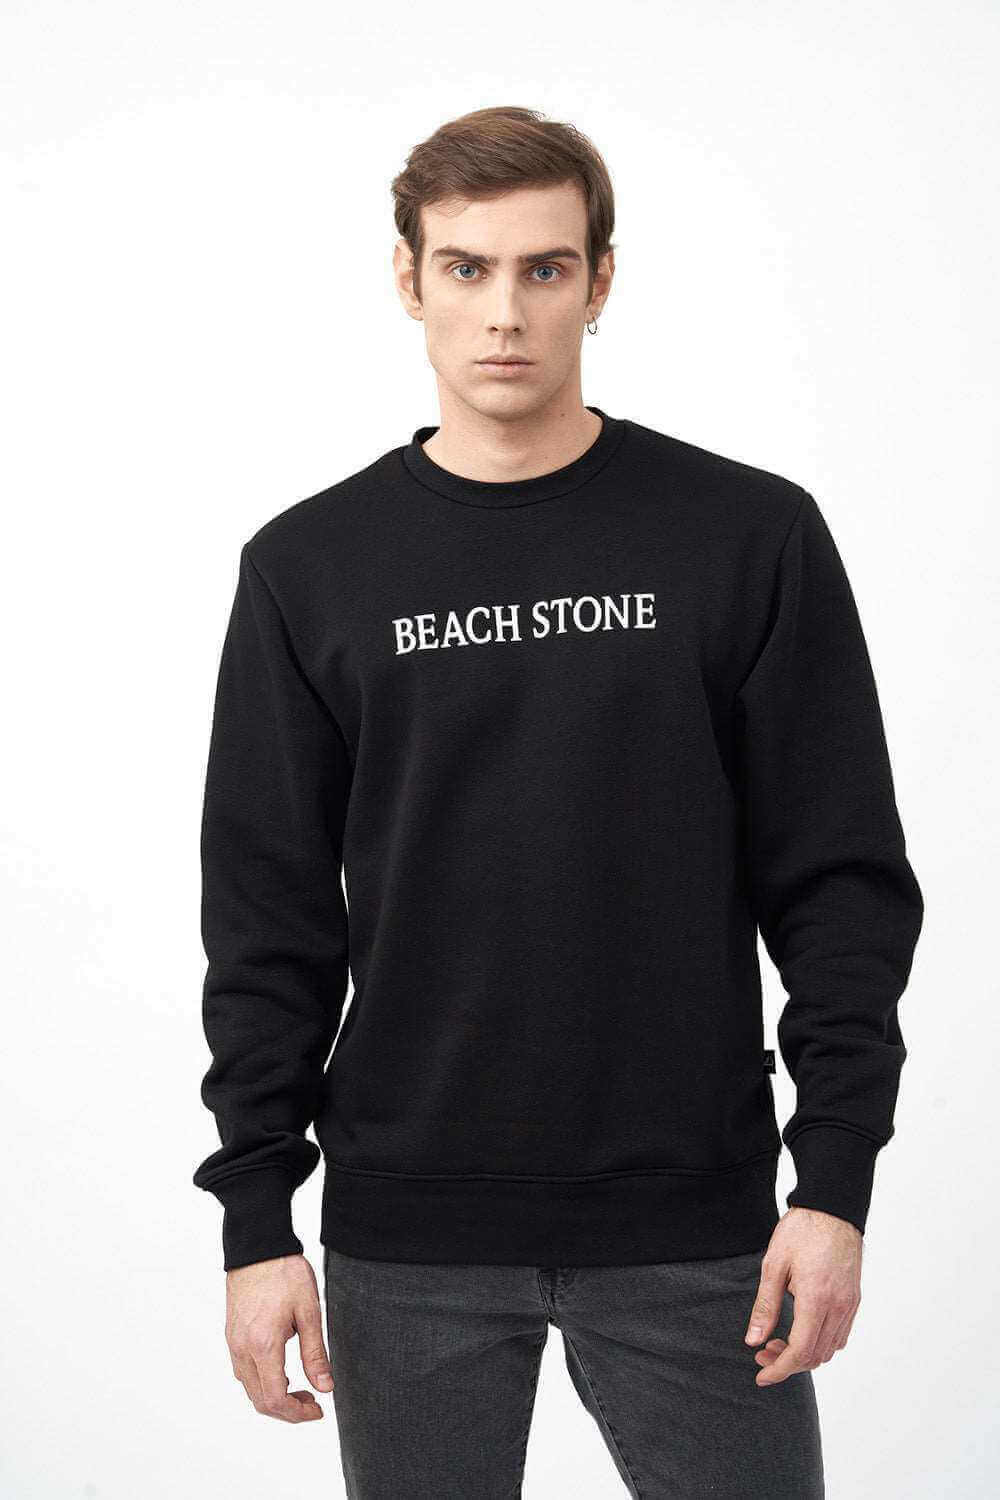 Front View of Crew Neck Men's Sweatshirt with Beach Stone Print